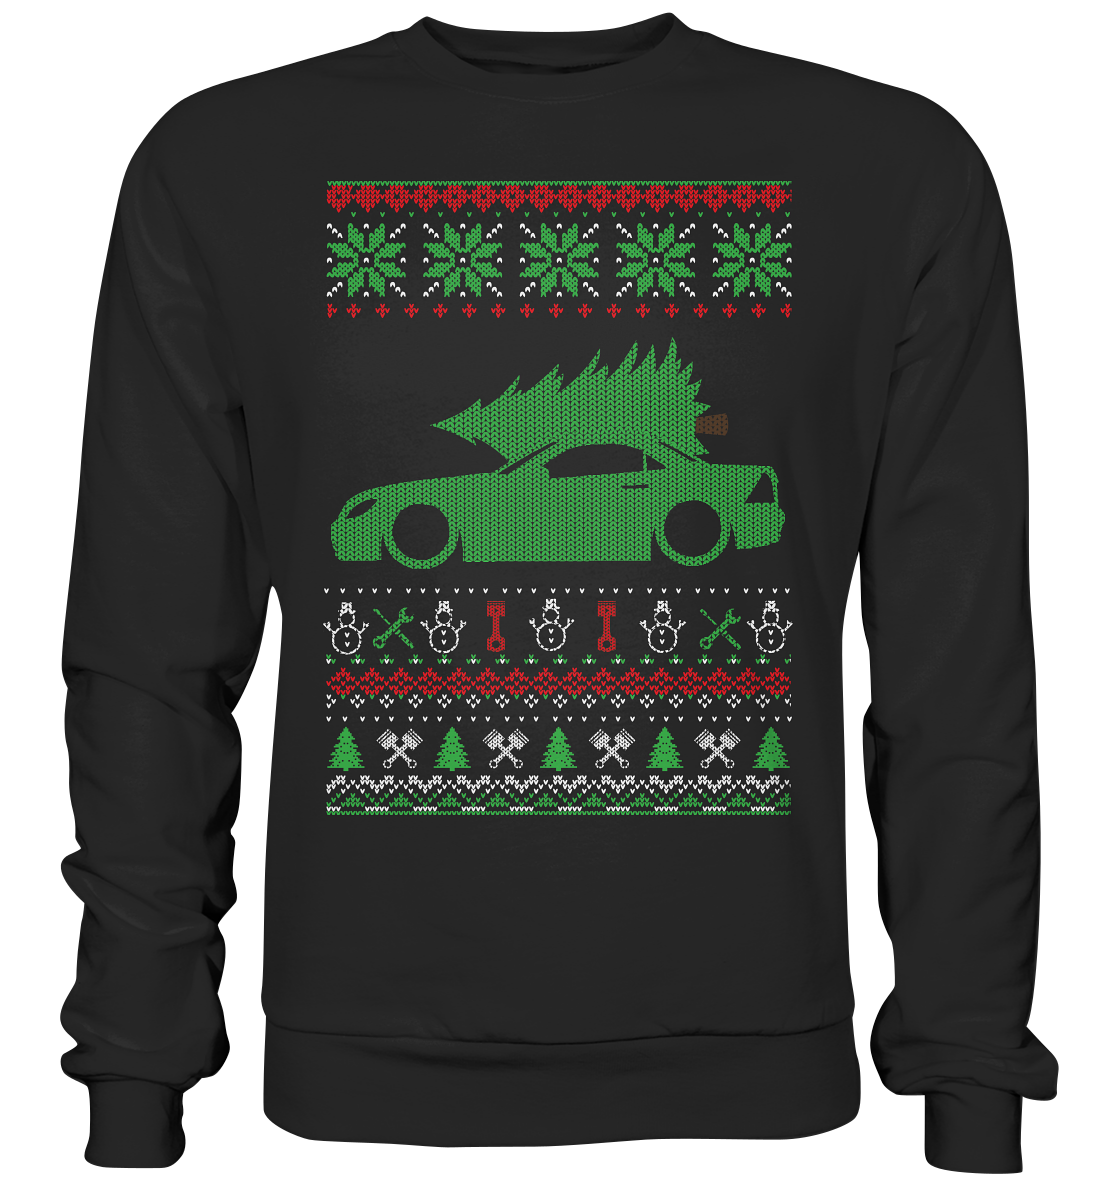 CODUGLY_MGKR170 - Premium Sweatshirt